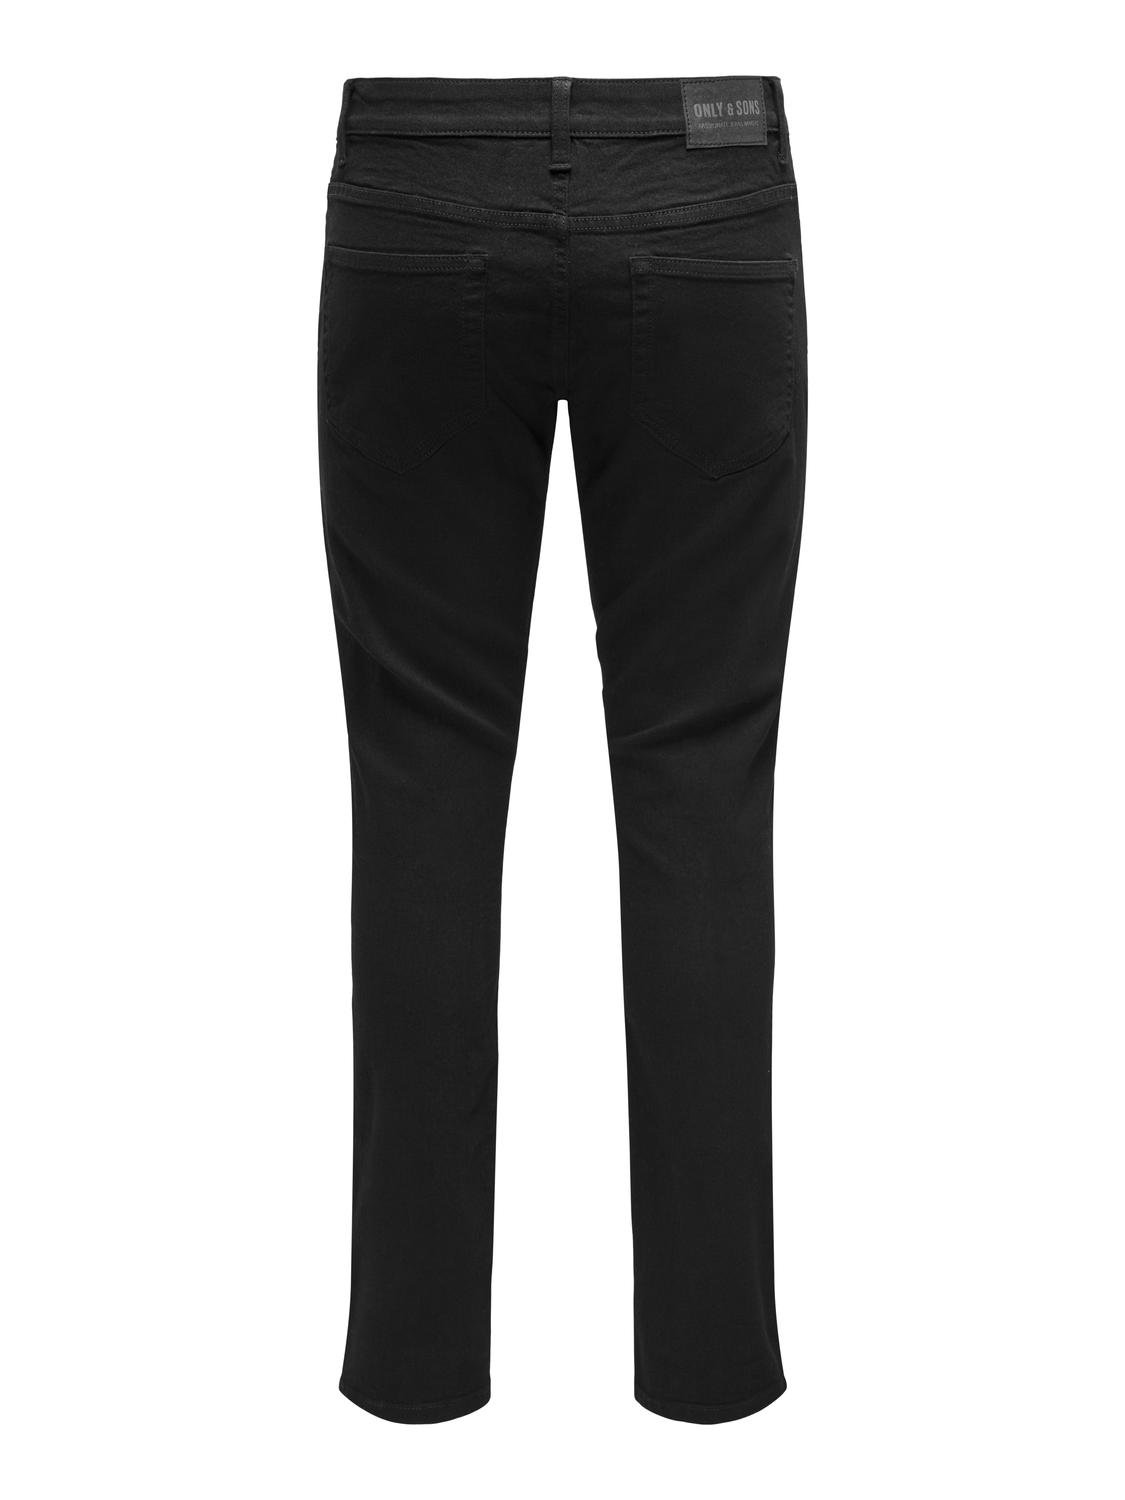 ONLY & SONS Slim Fit Mid rise Jeans -Black Denim - 22027899